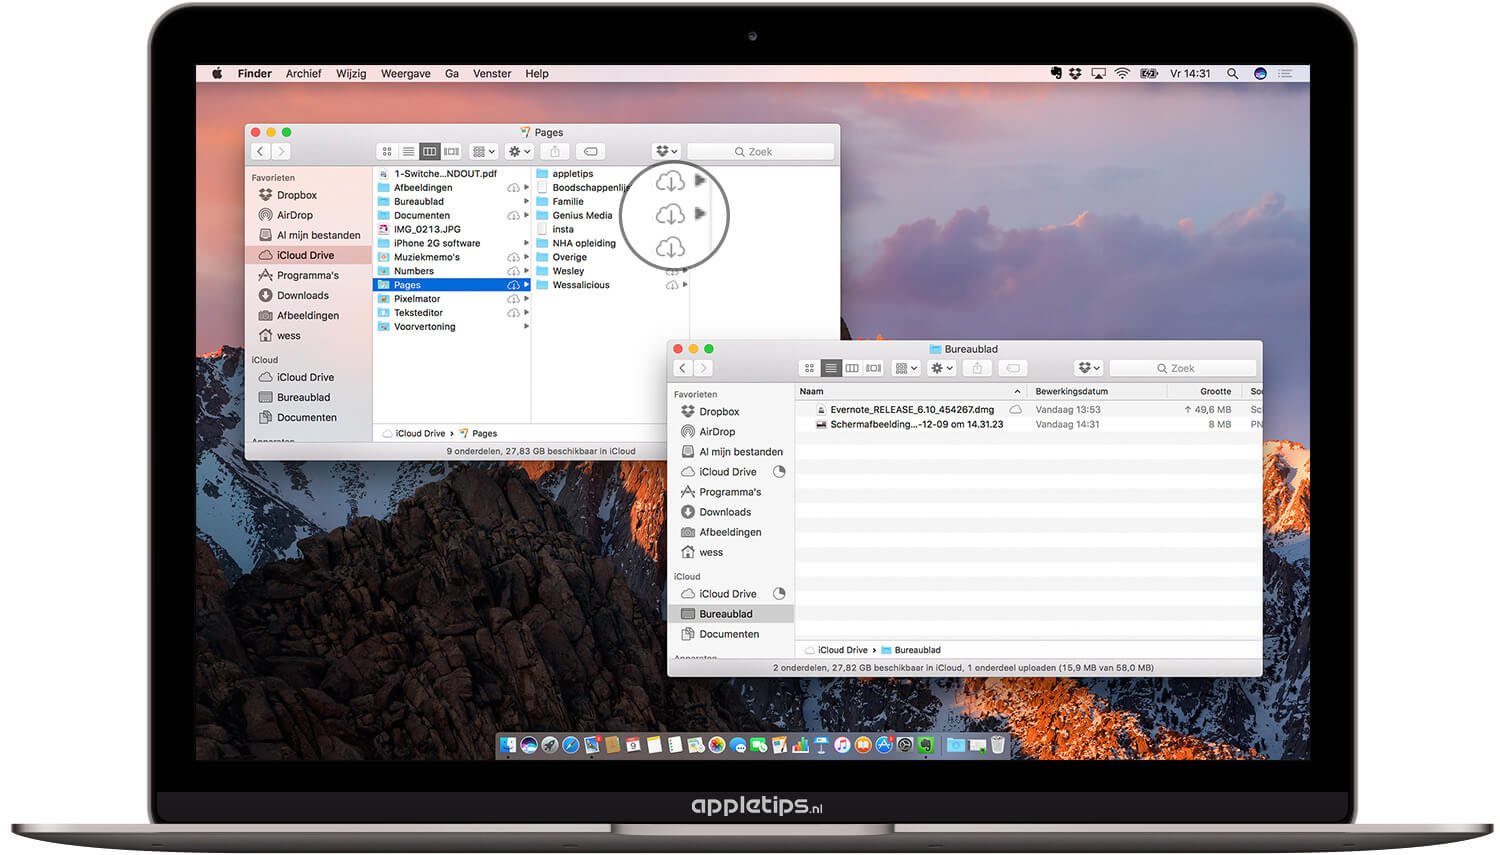 dropbox offline for mac